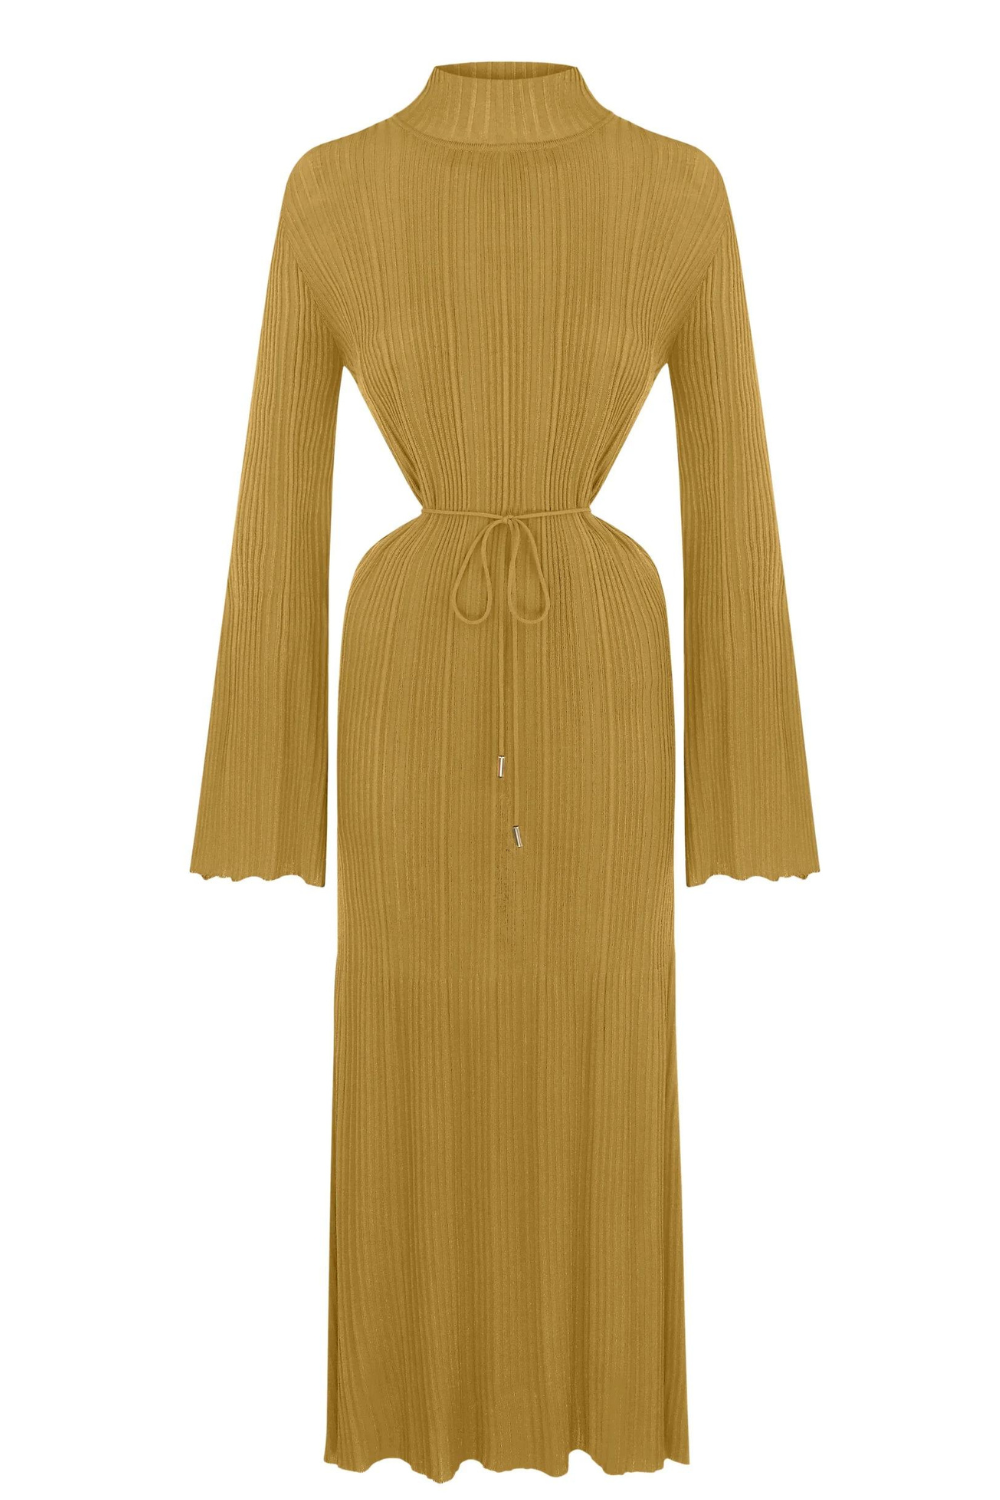 Mustard color knit dress with cutouts at the waist (K.KVIT, T.MOSCA) PDJ23-07